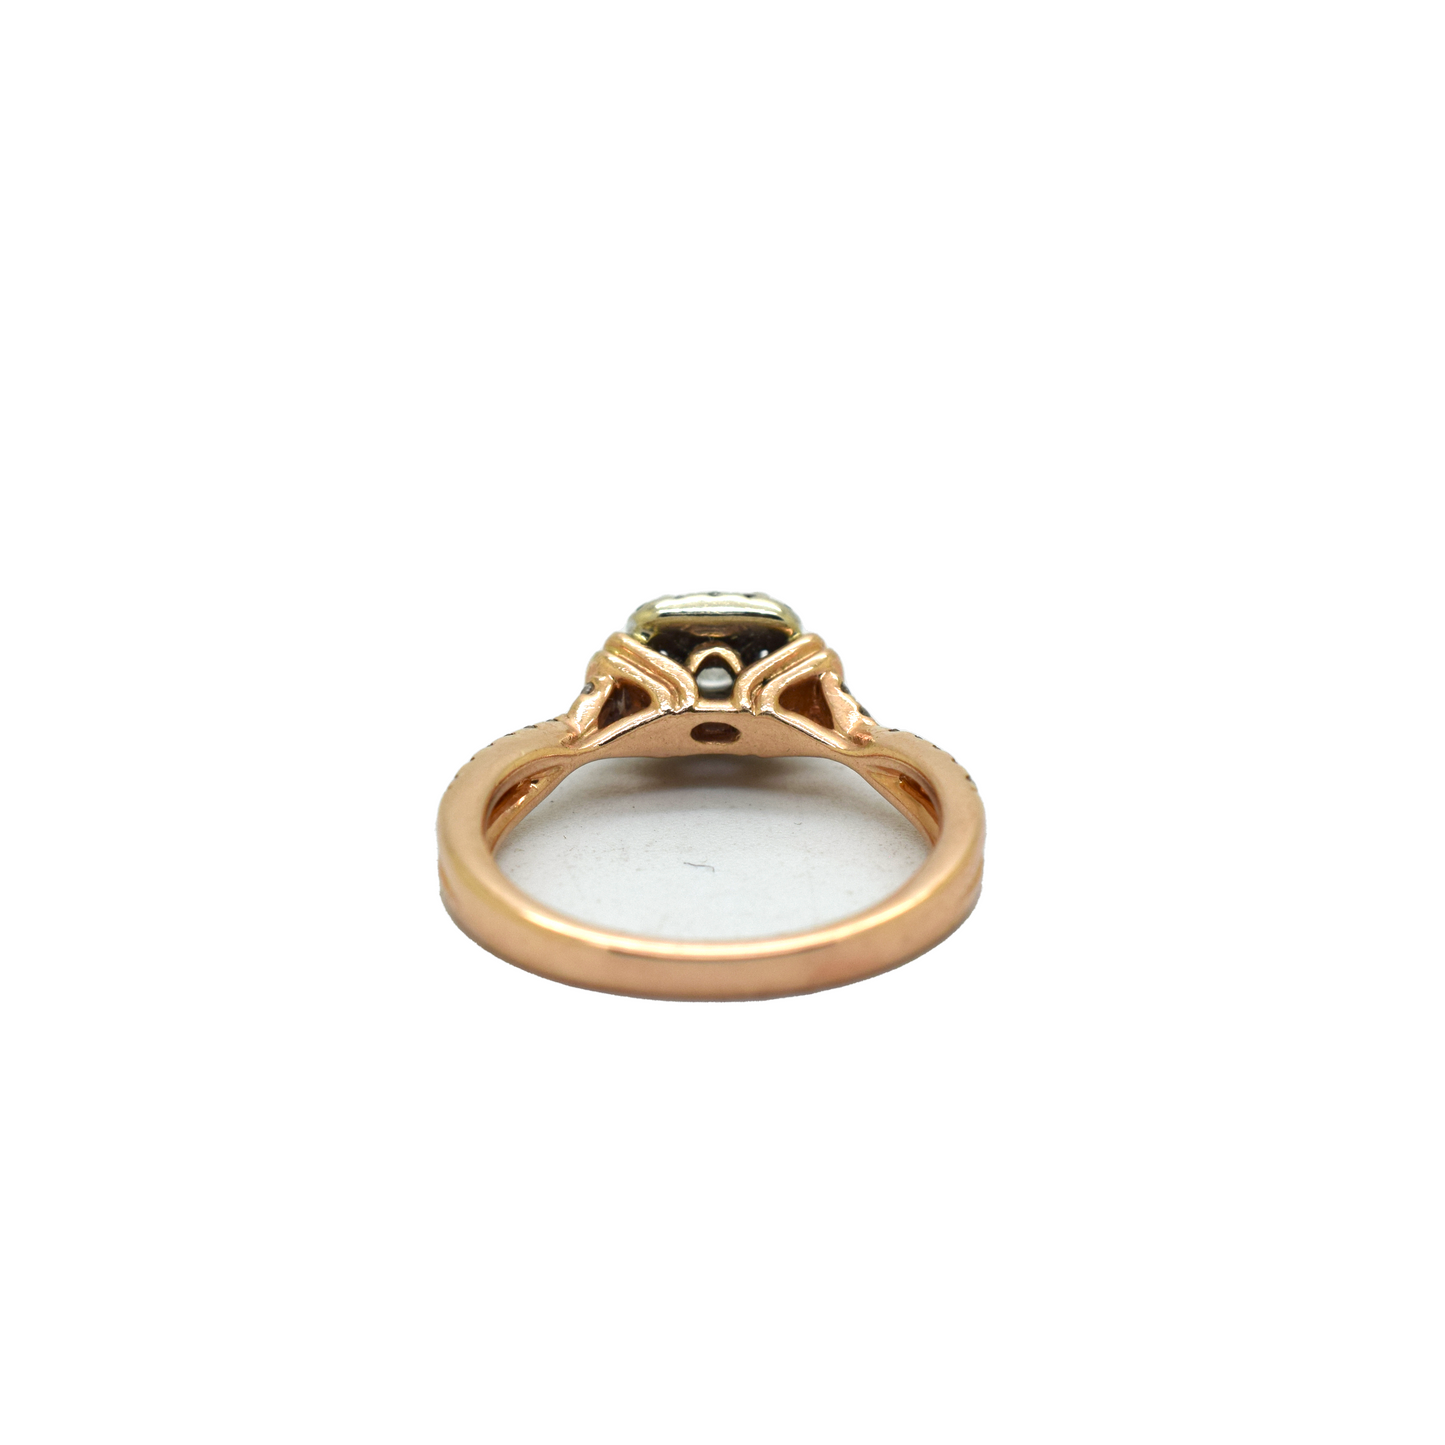 14k Gold Diamond Engagement Ring 0.82ct